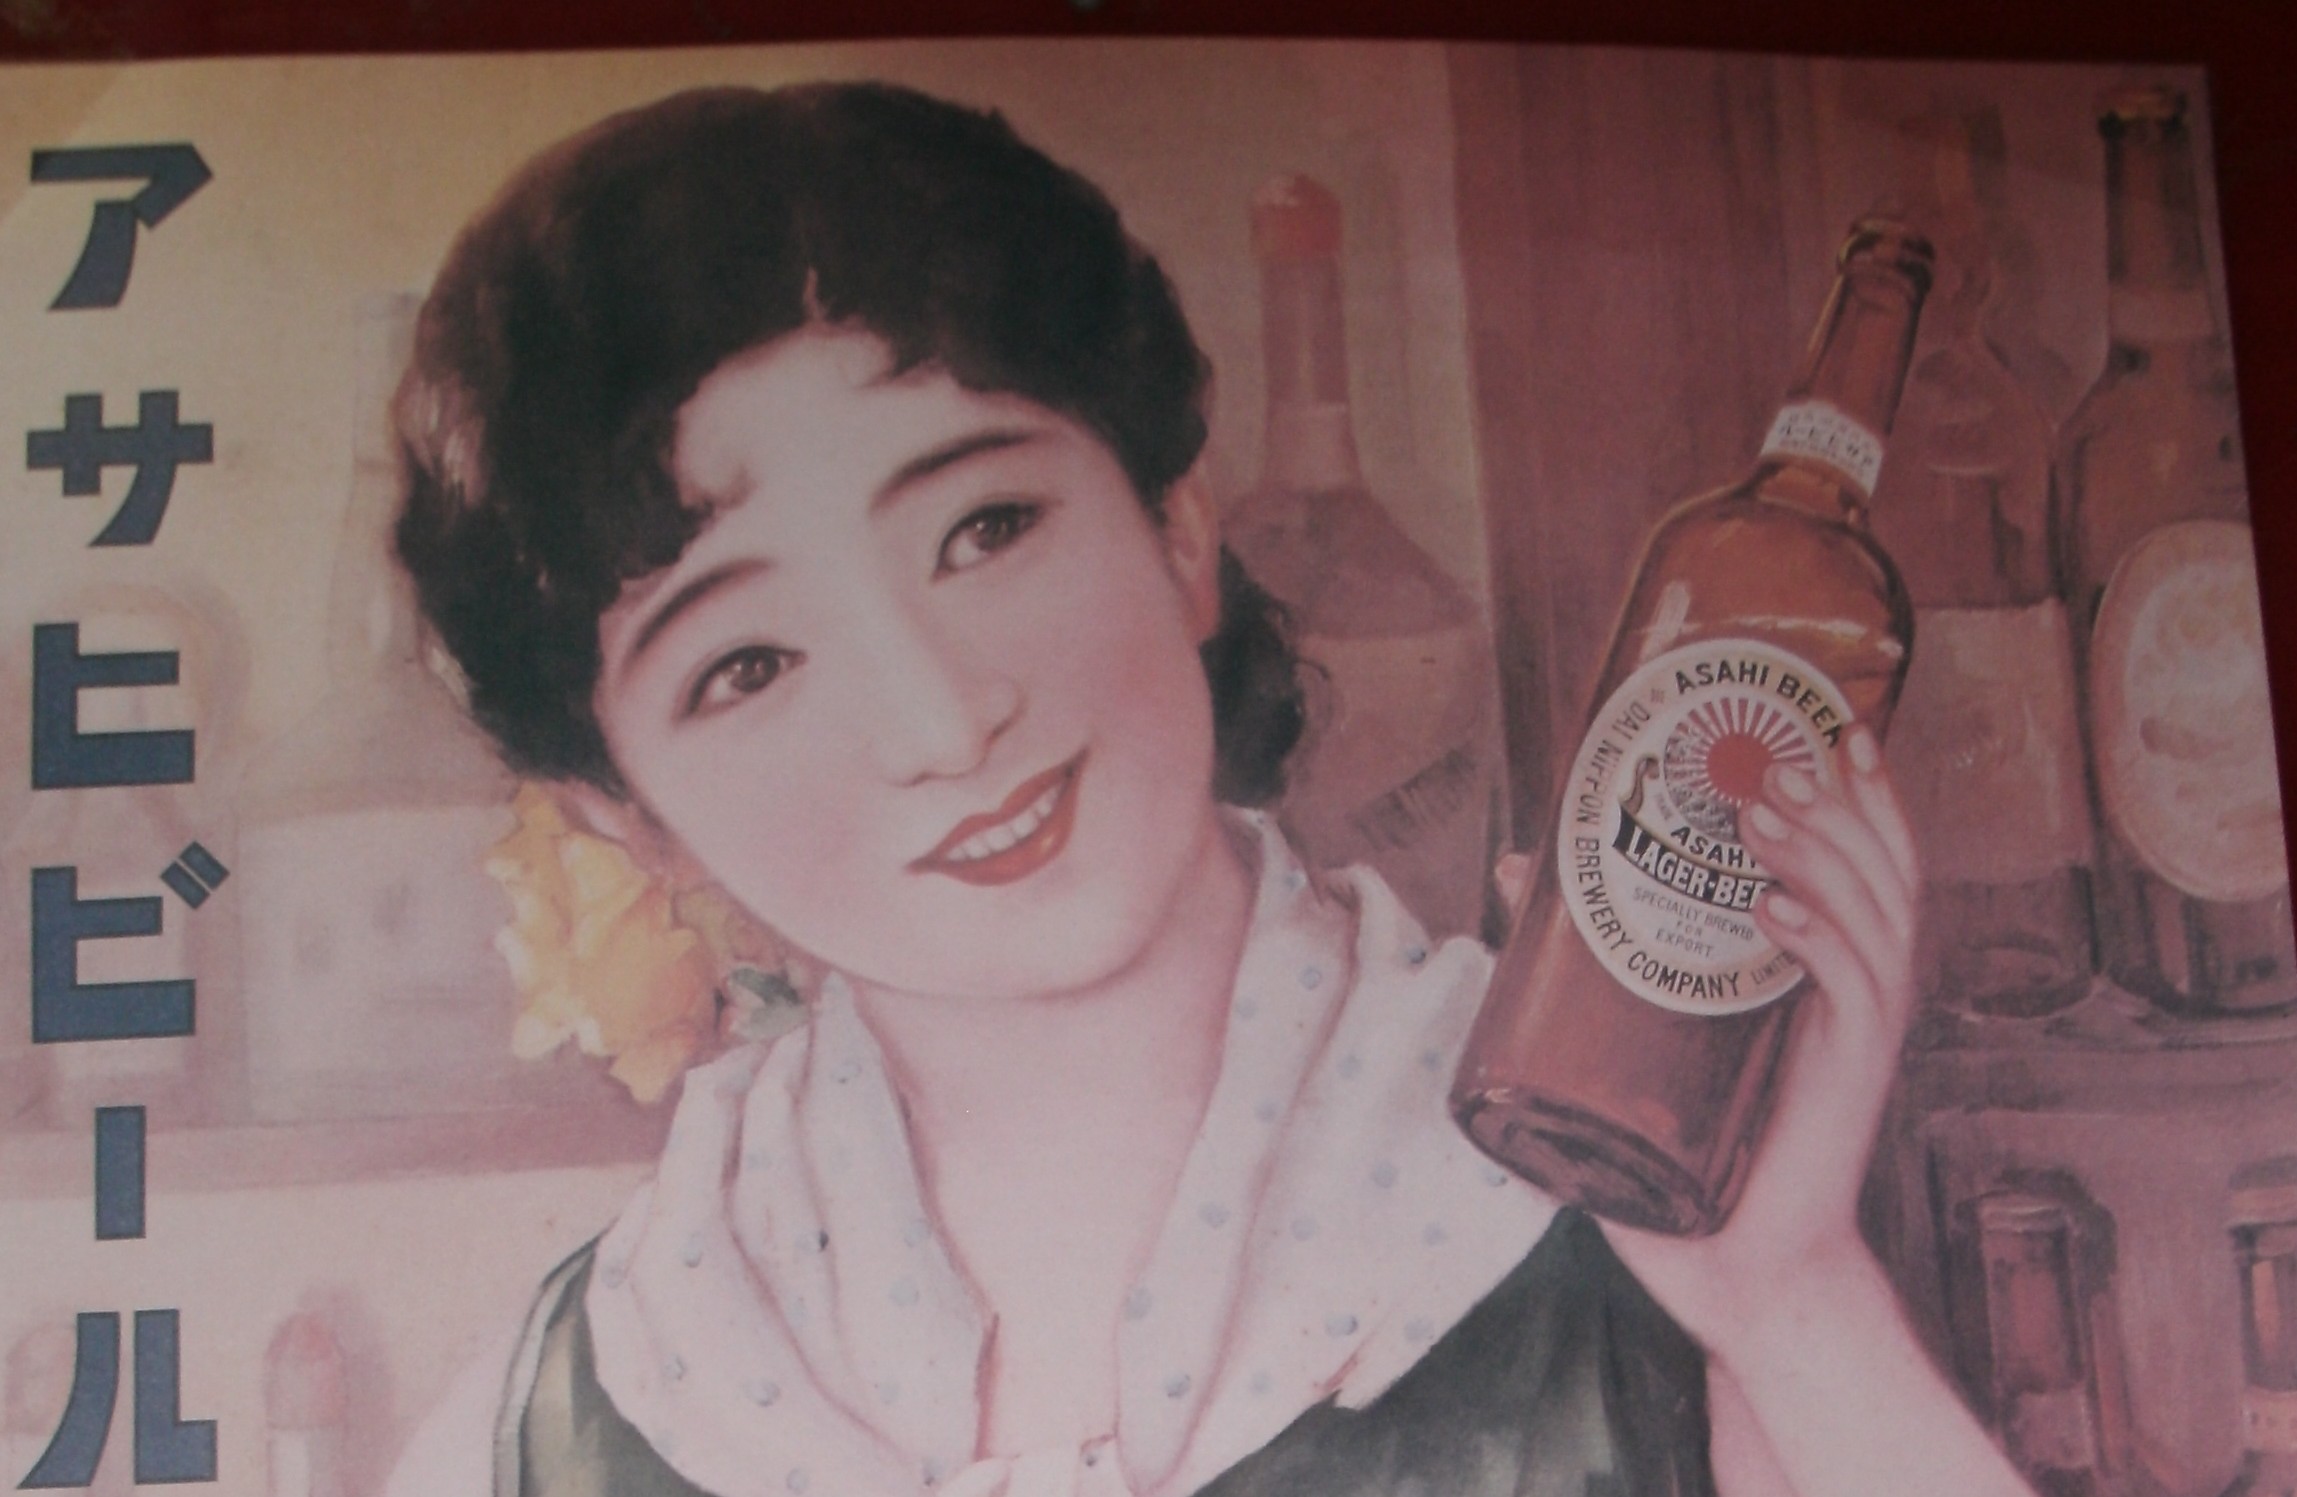 Asahi_Beer_brand_in_Dai_Nippon_Brewery_Company's_poster.jpg